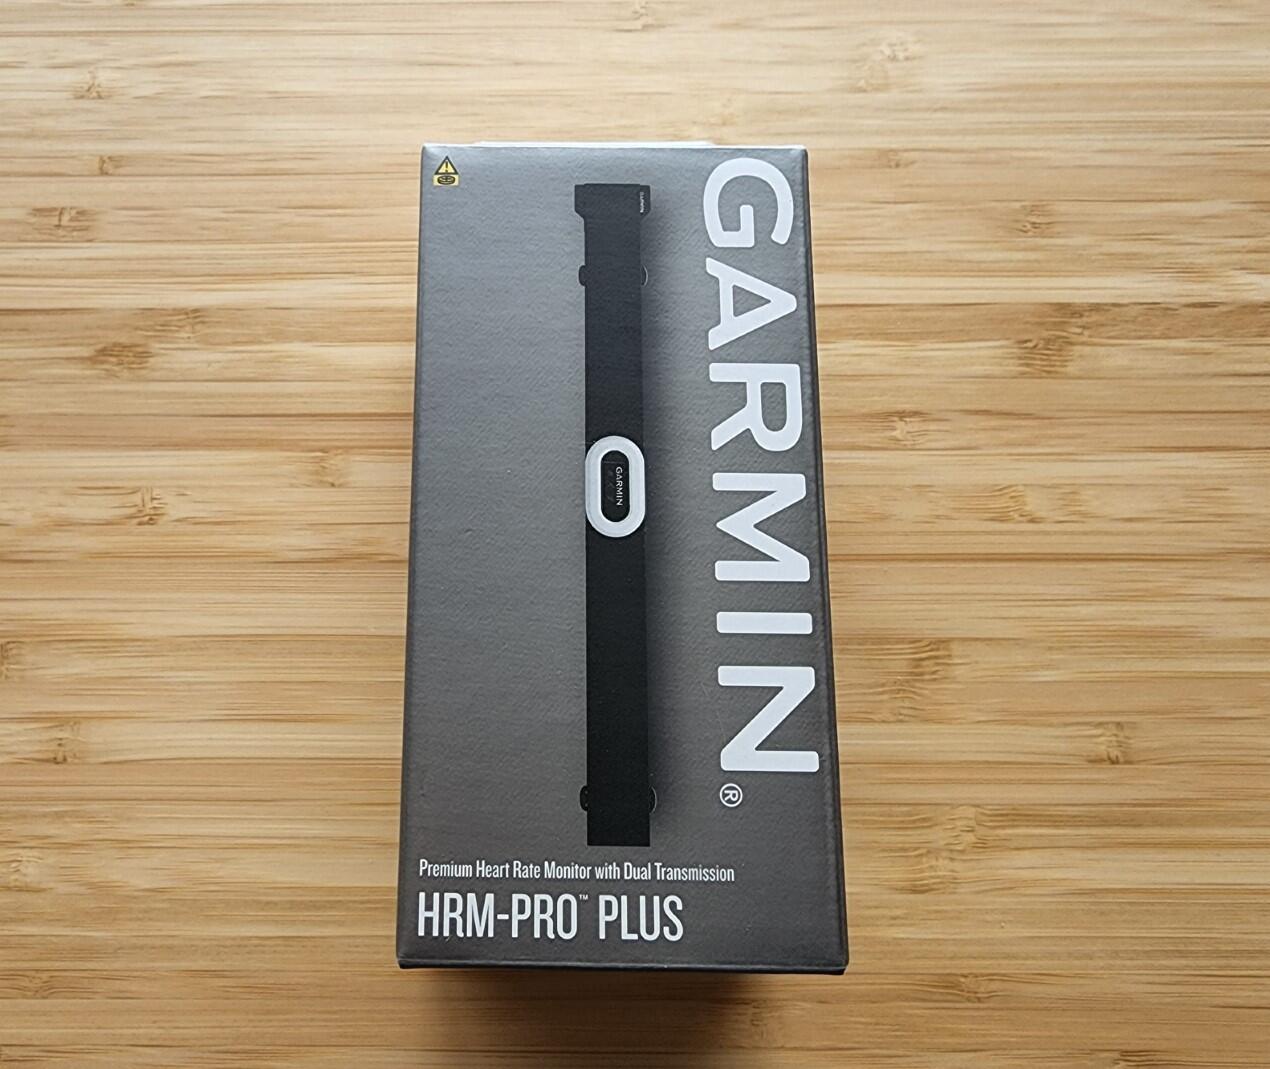 Garmin HRM-Pro Plus review: One very handy design update, same